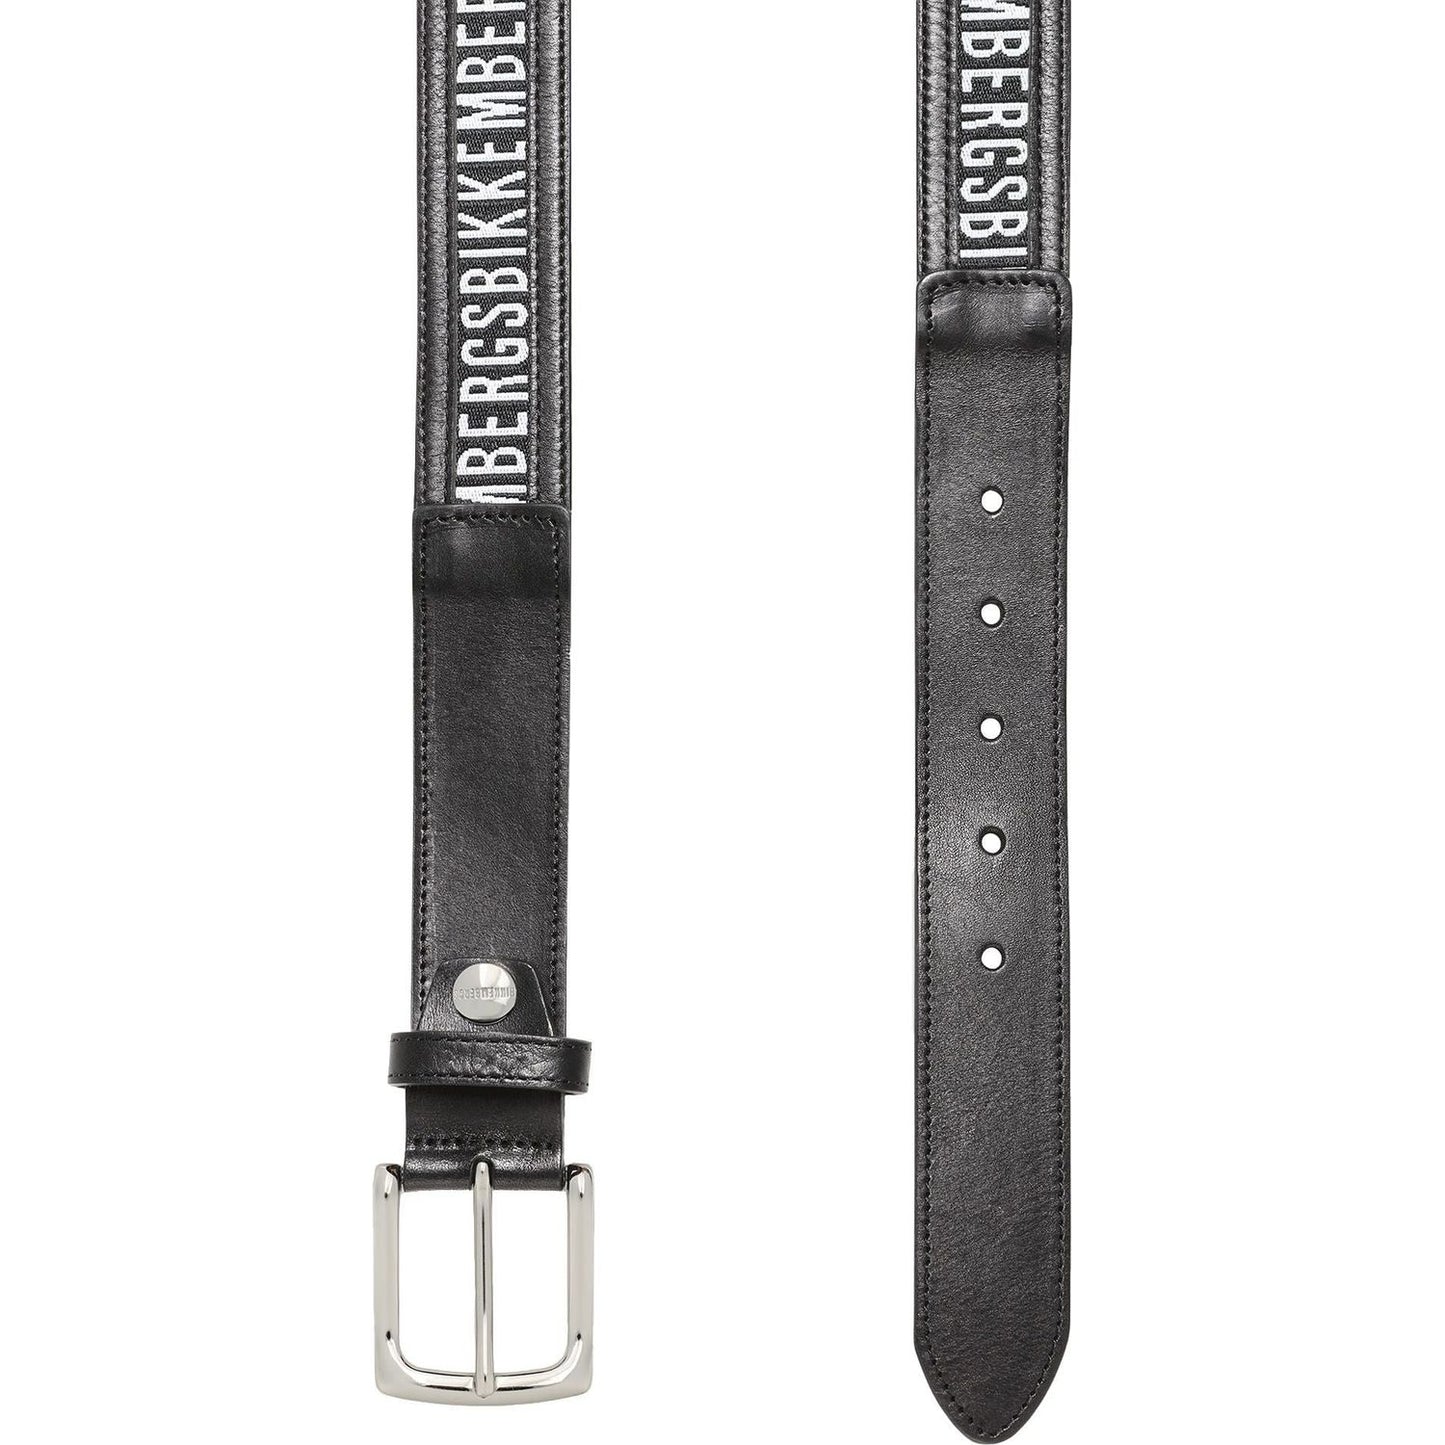 Bikkembergs Sleek Black Calfskin Leather Belt e-bikkembergs-belt-16 MAN BELTS product-6636-874340884-41-eb2cfc78-a1c.jpg